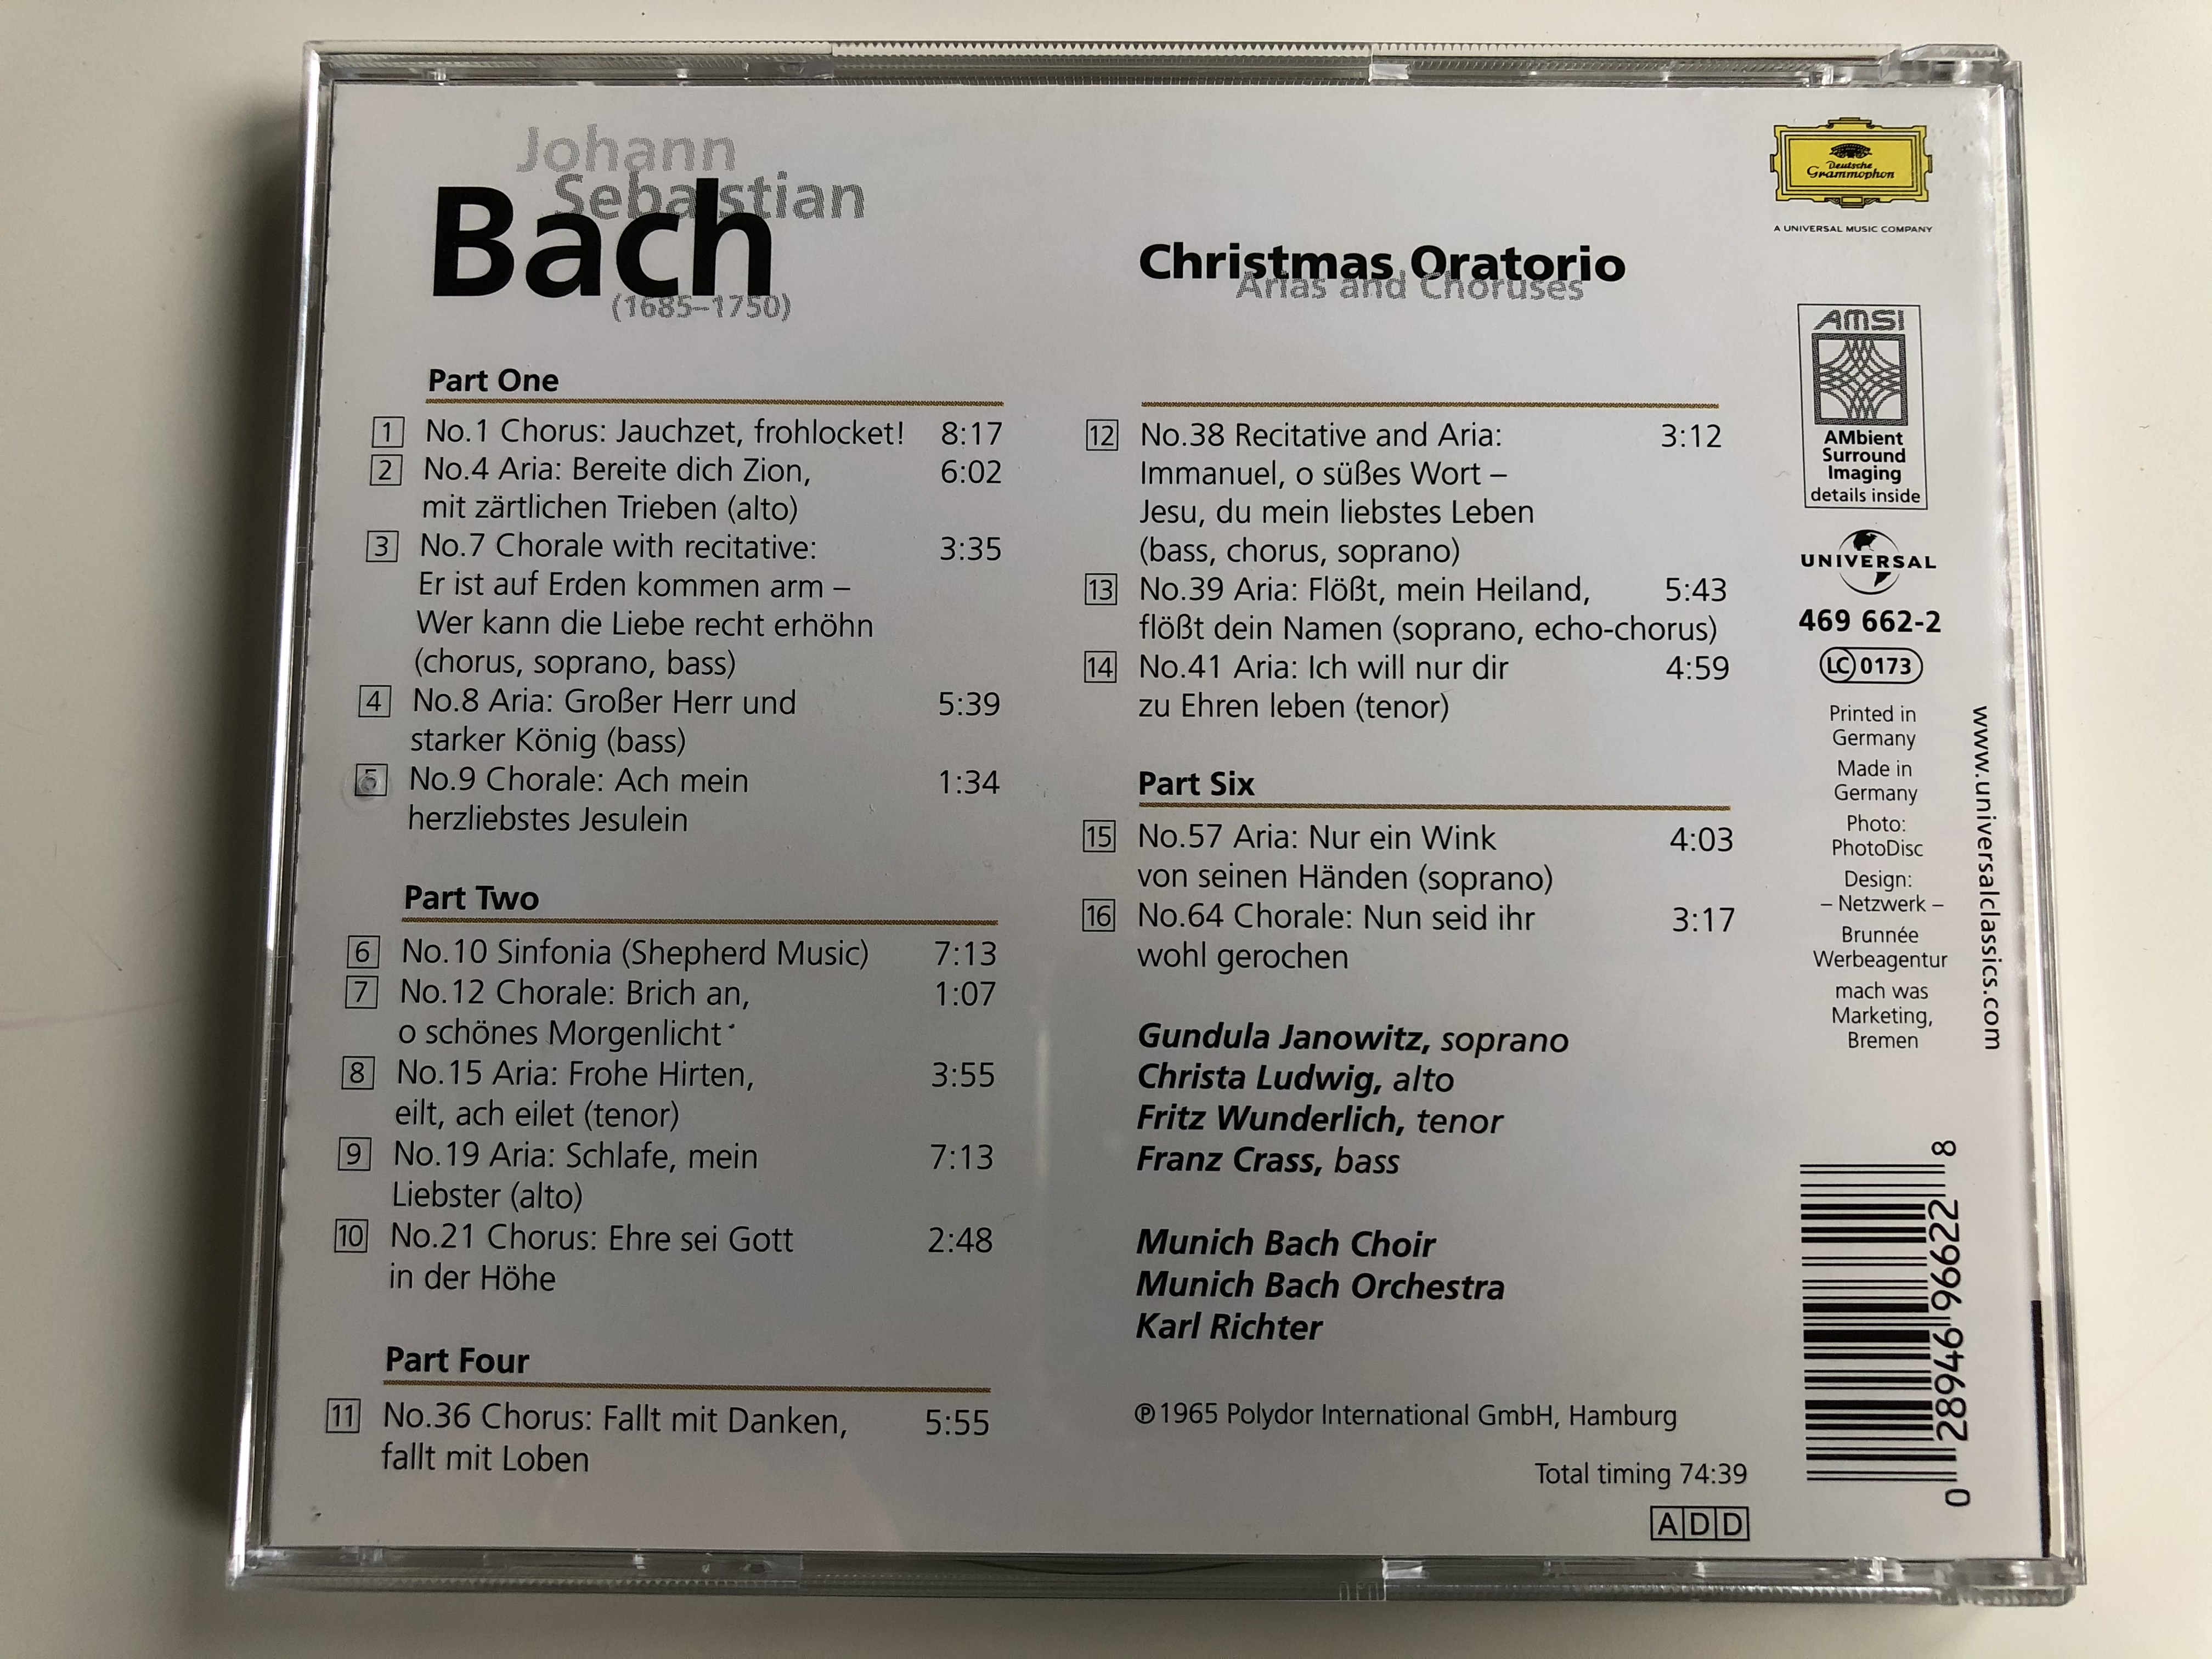 johann-sebastian-bach-christmas-oratorio-arias-choruses-janowitz-ludwig-wunderlich-crass-munich-bach-choir-munich-bach-orchestra-richter-deutsche-grammophon-audio-cd-469-662-2-1-4-.jpg